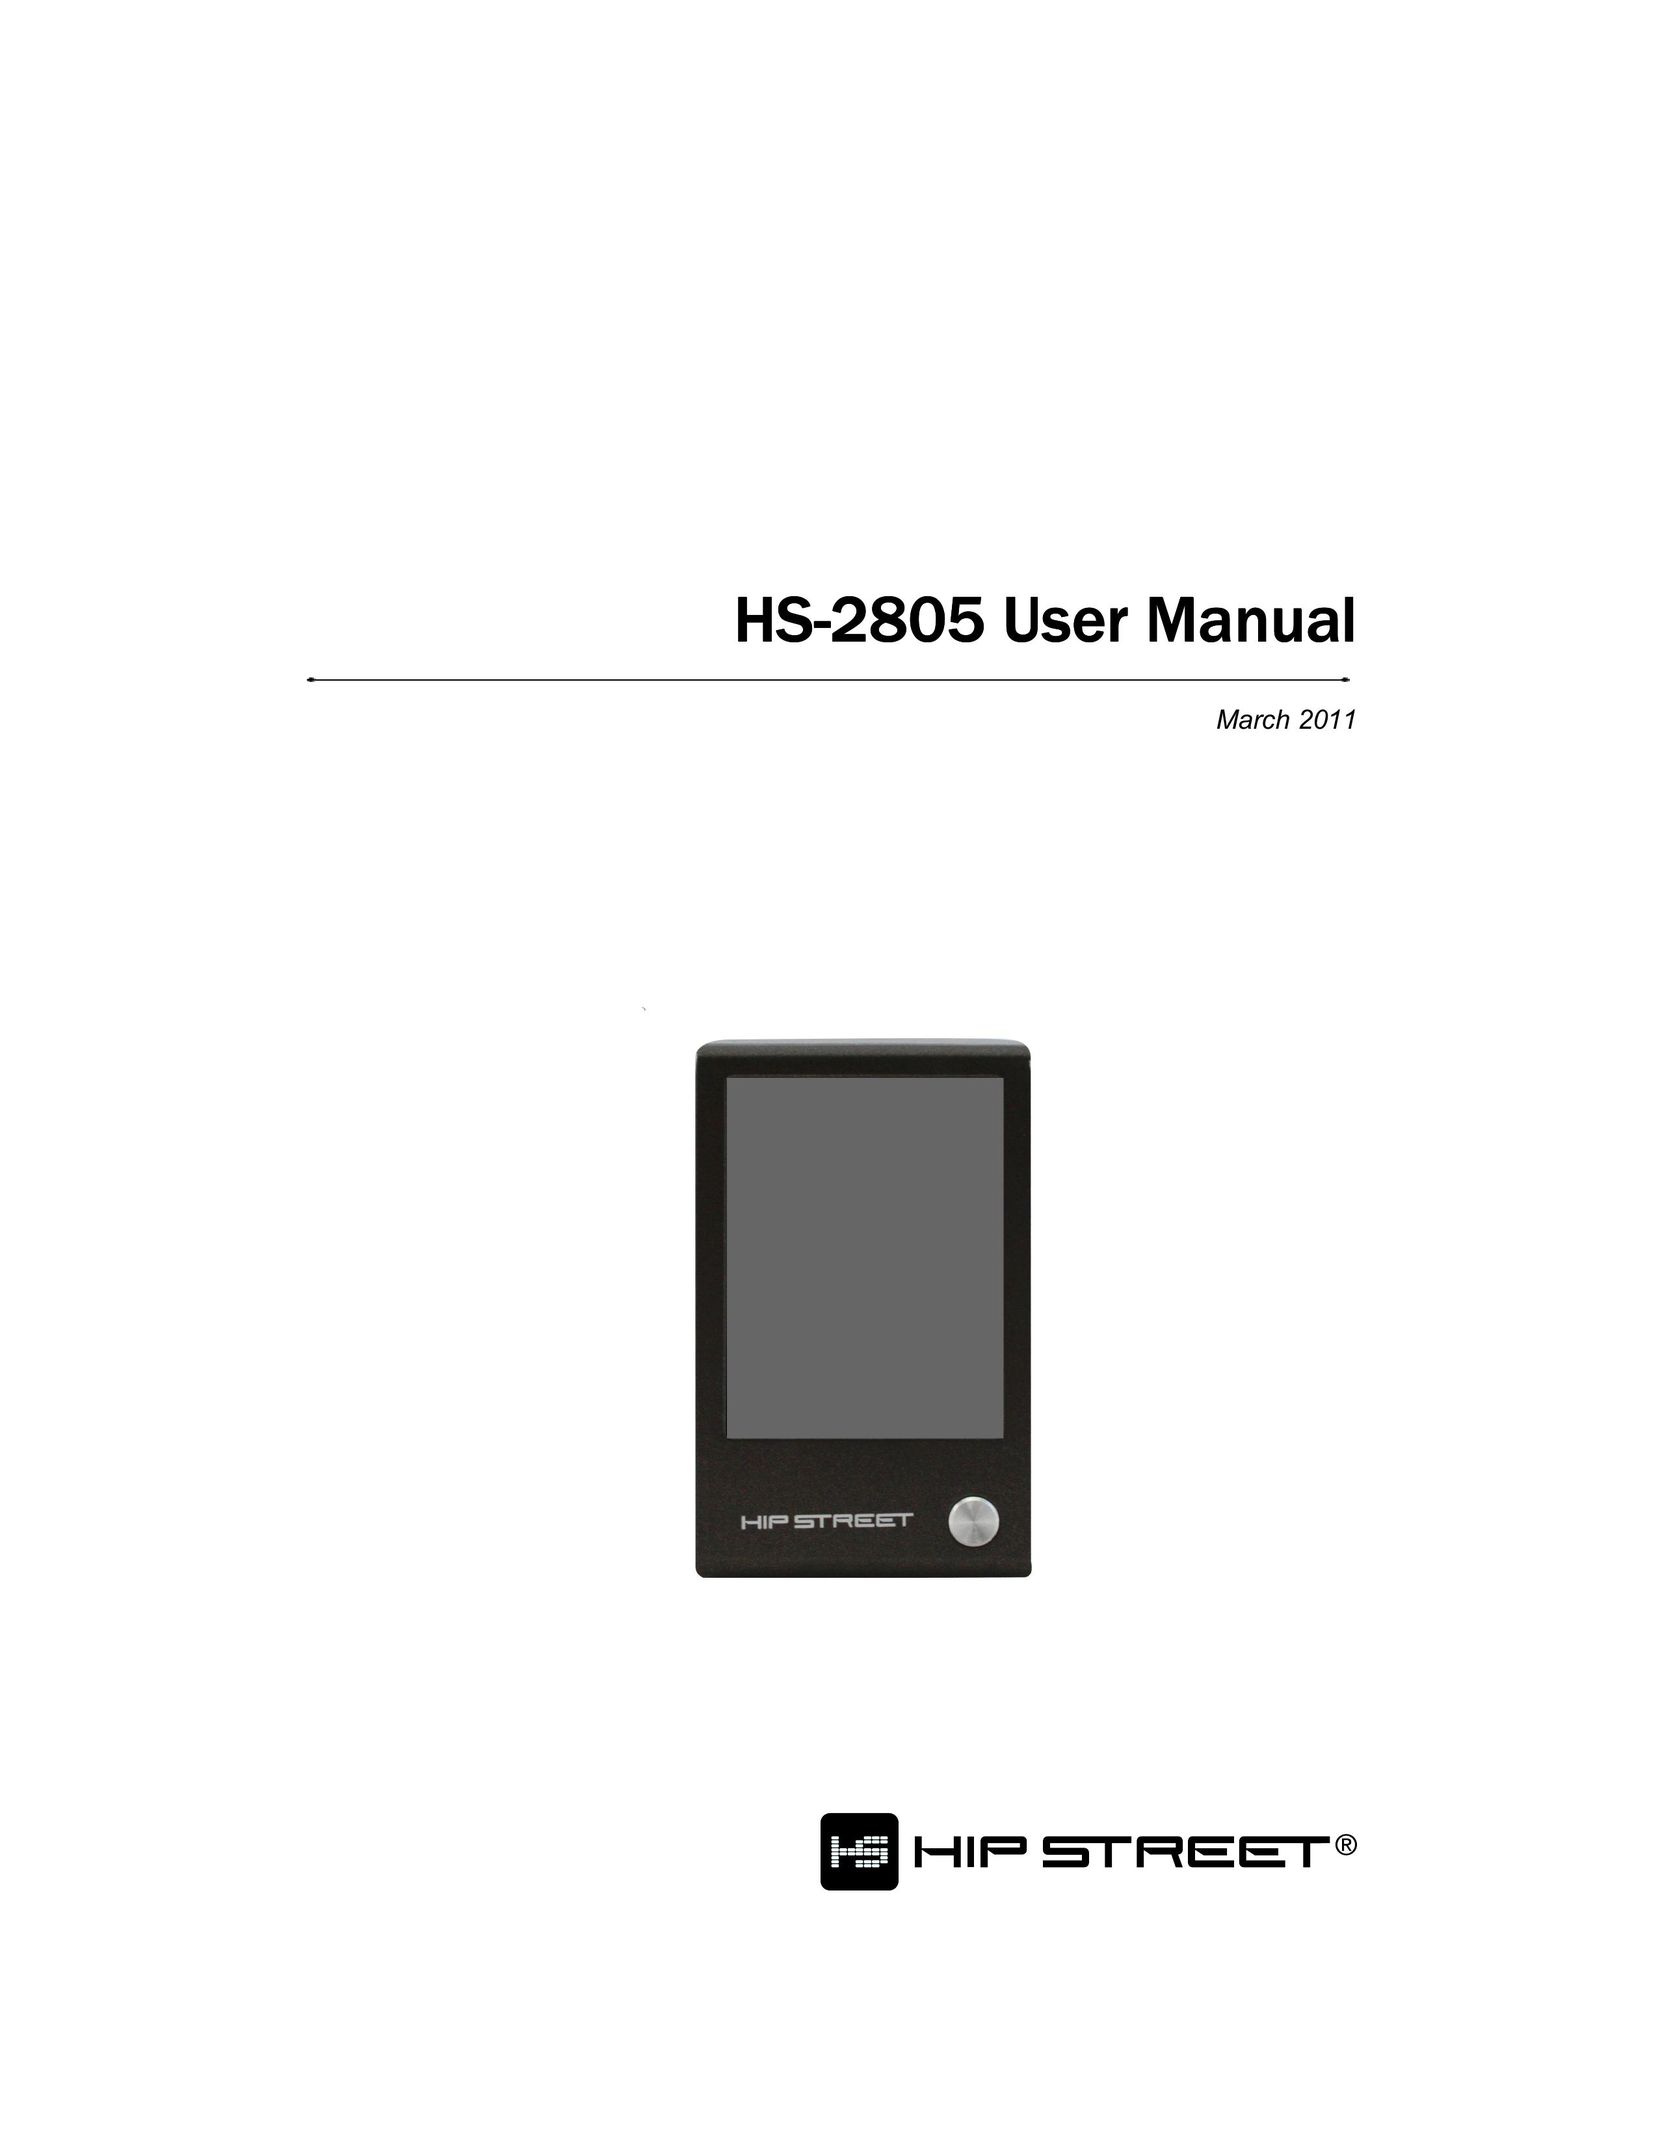 Hip Street HS-2805 MP3 Player User Manual